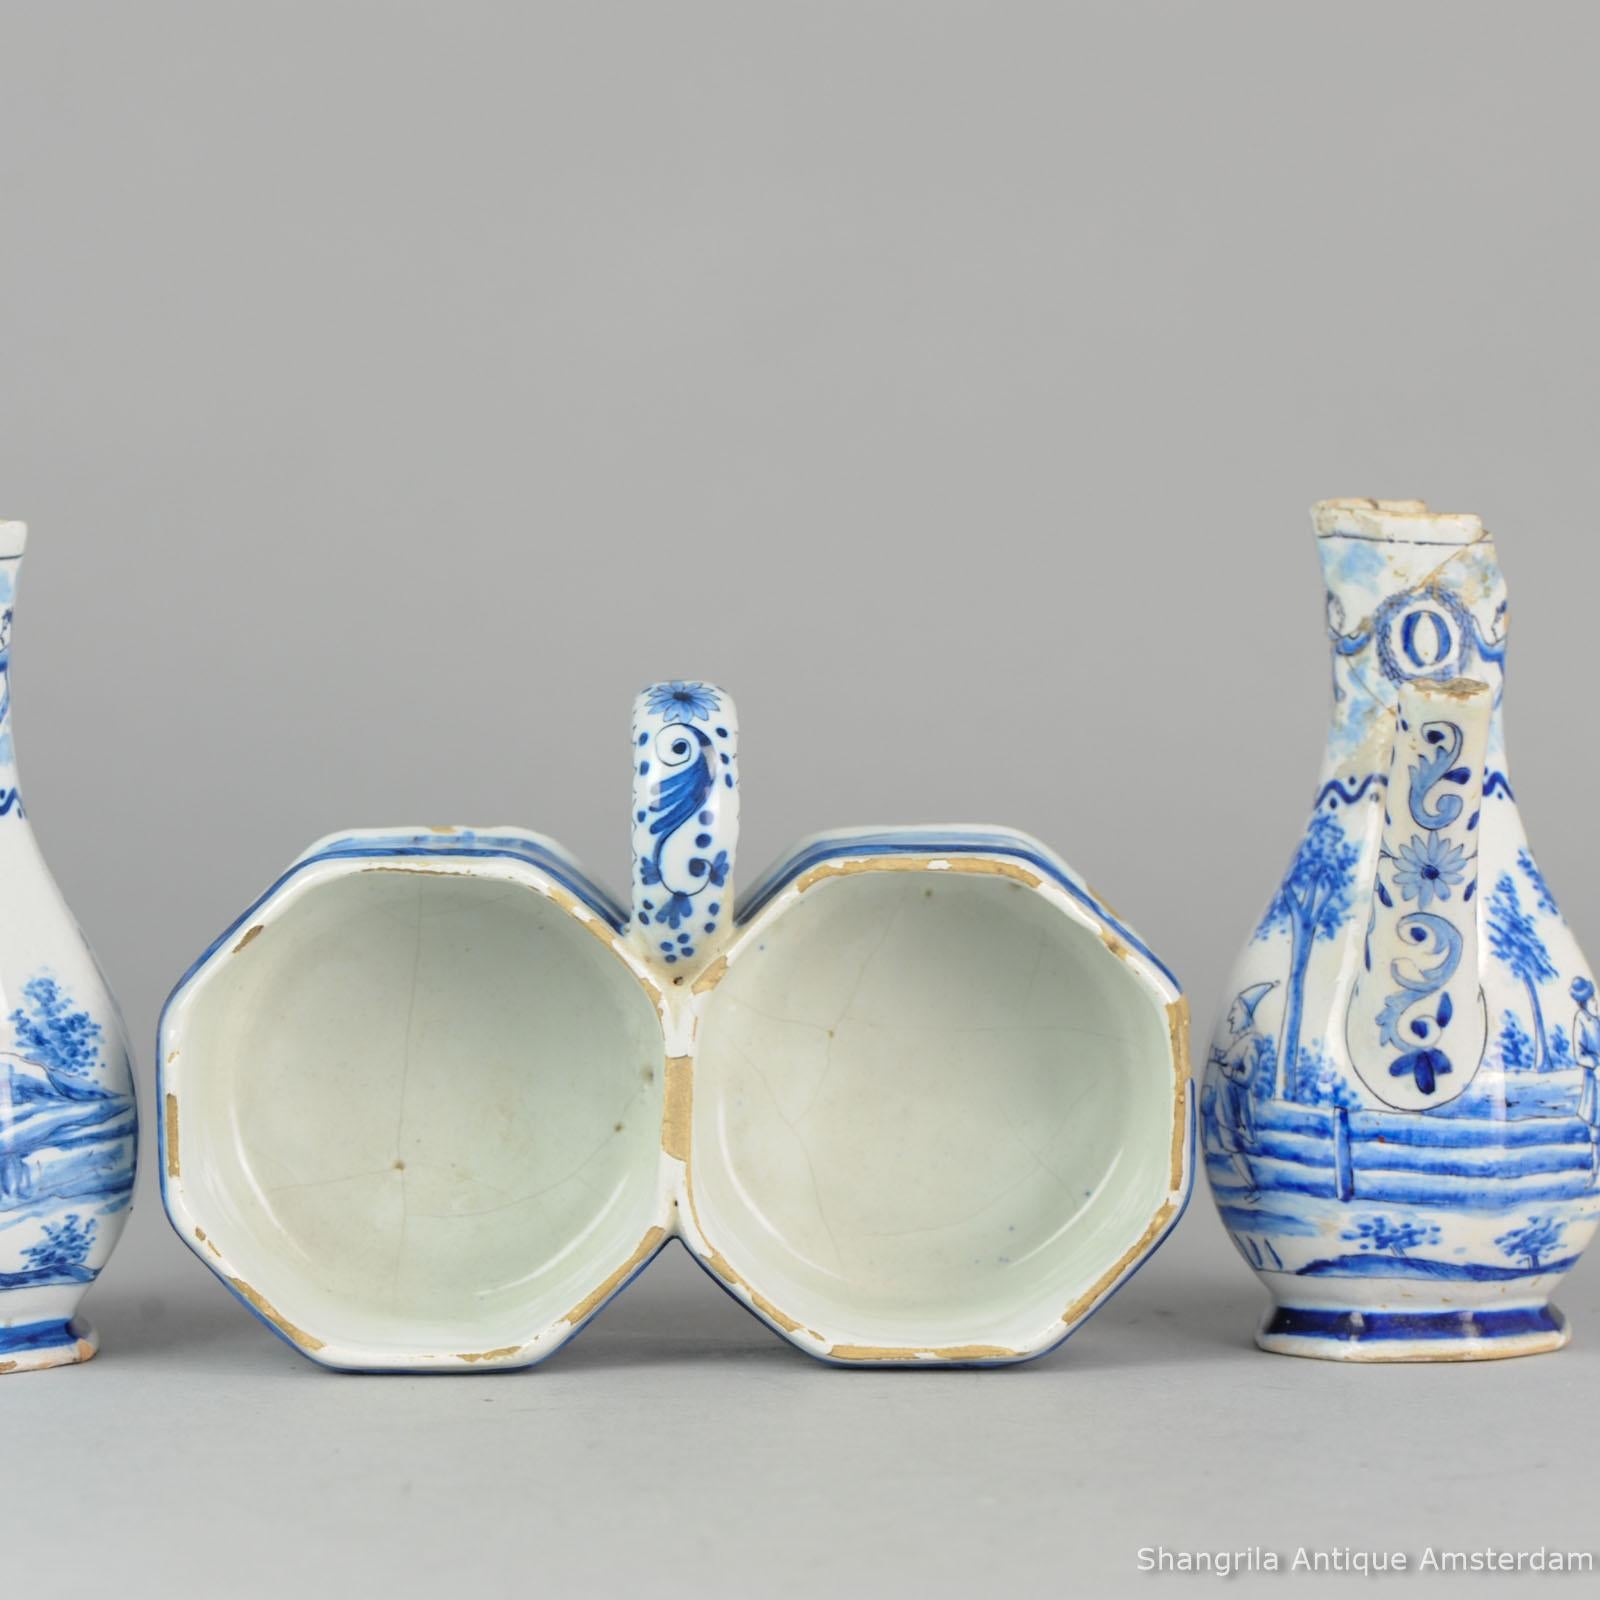 Antique De Klauw Delft Oil & Vinegar Blue & White Deftware Plates, ca 1700. Very nice set.

Additional information:
Material: Porcelain & Pottery
Color: Blue & White
Region of Origin: China
Period: ca 1700
Original/Reproduction: Original
Age: ca